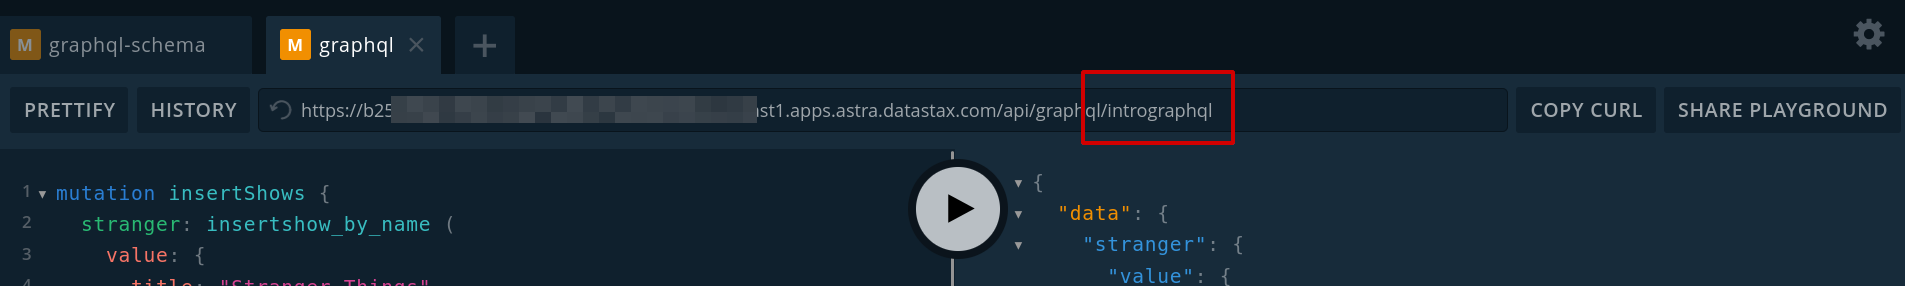 GraphQL URL ending